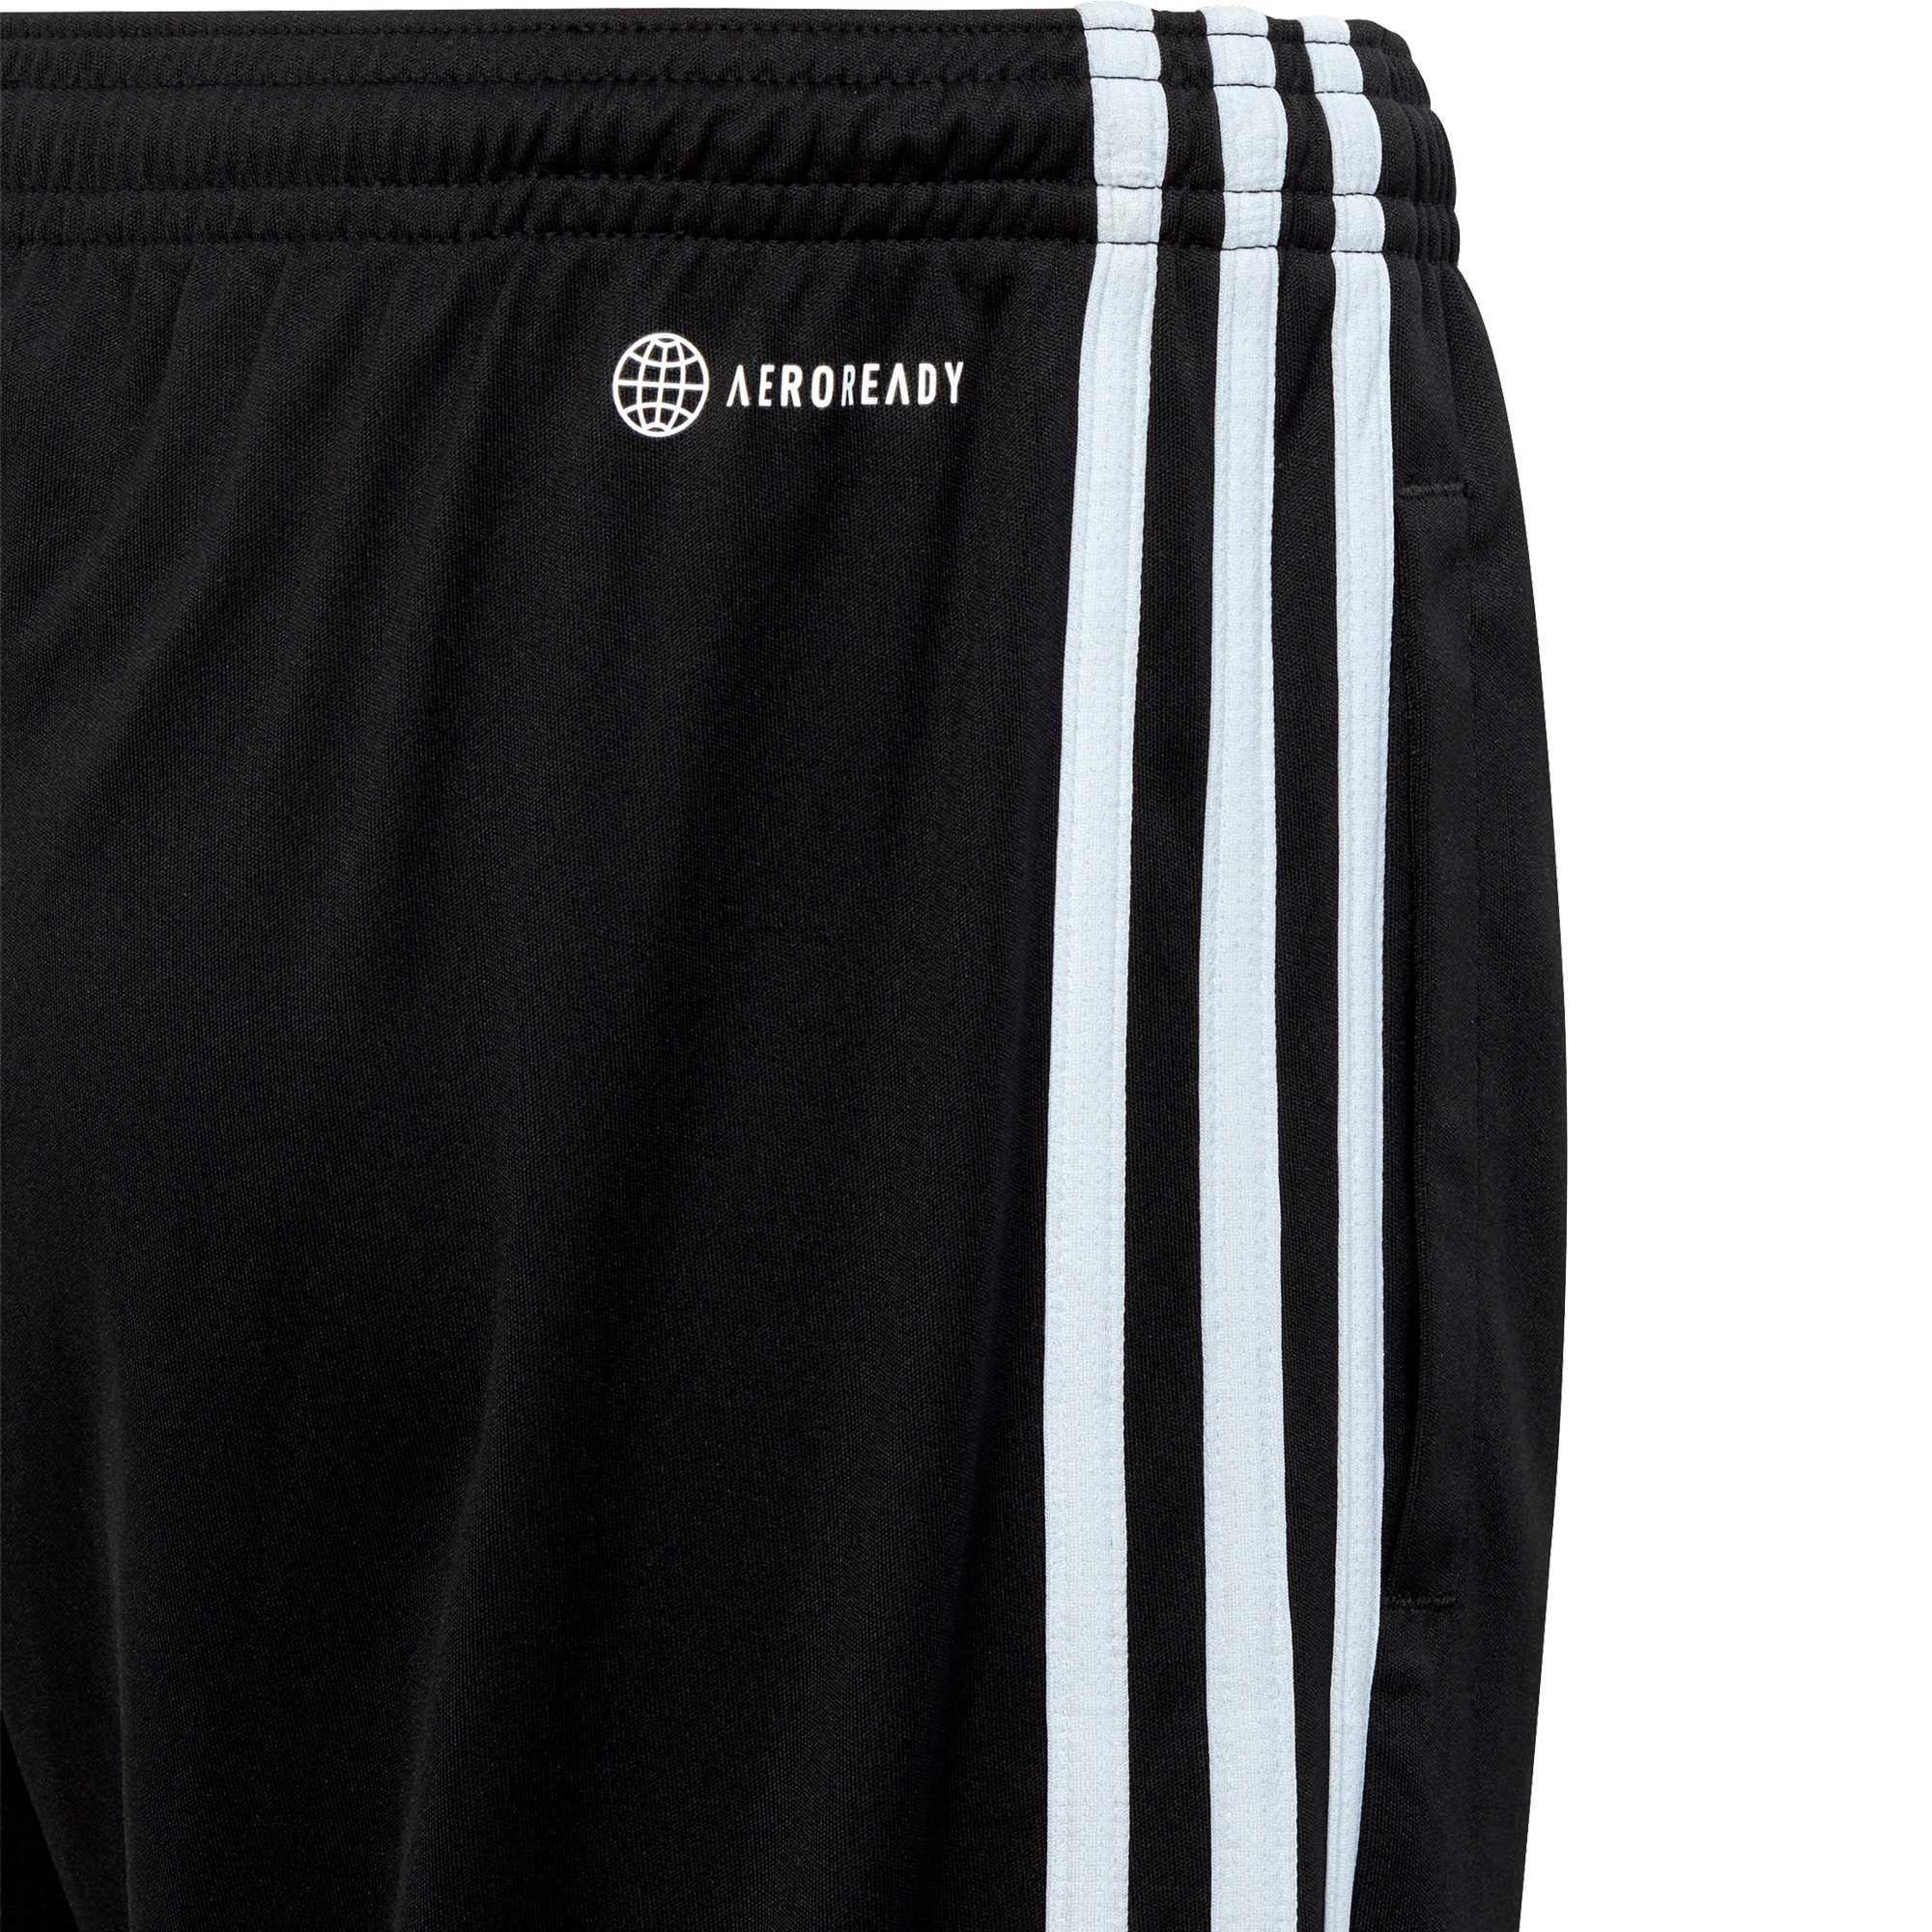 - Shorts Bittl 3-Stripes at adidas Sport black Shop Essentials Train Kids Aeroready